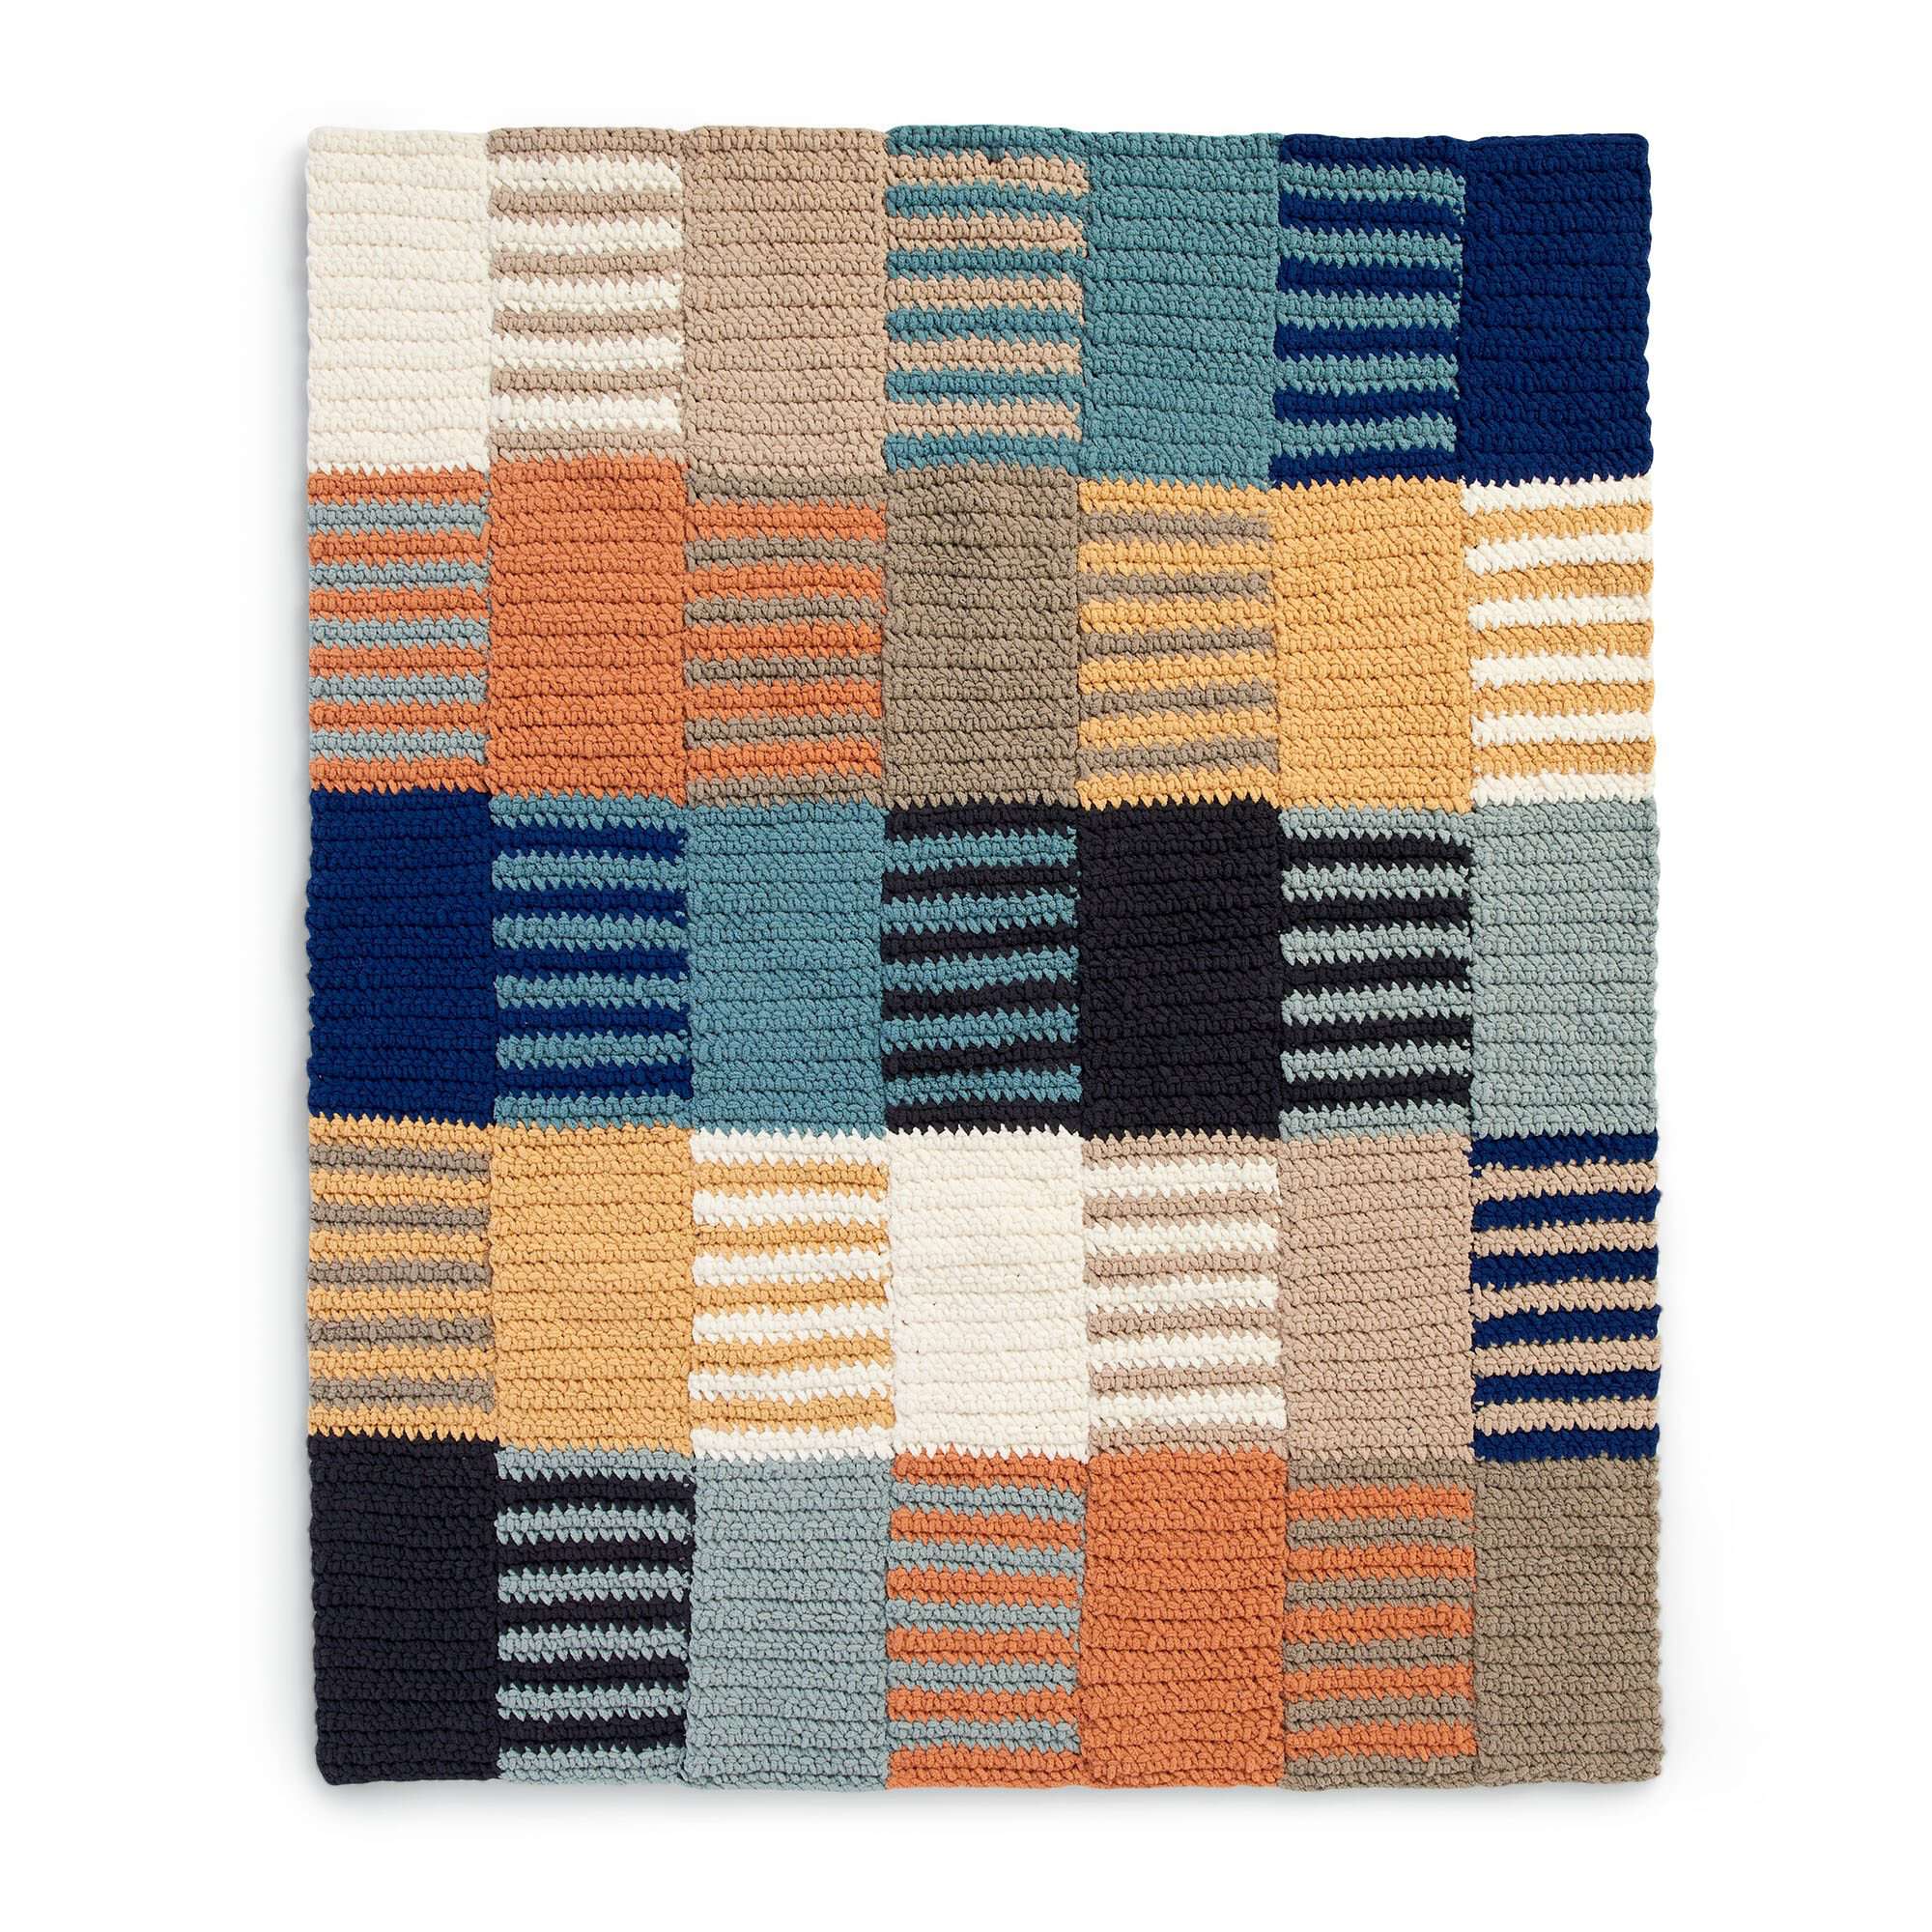 Bernat Interlocking Color Block Crochet Blanket | Yarnspirations